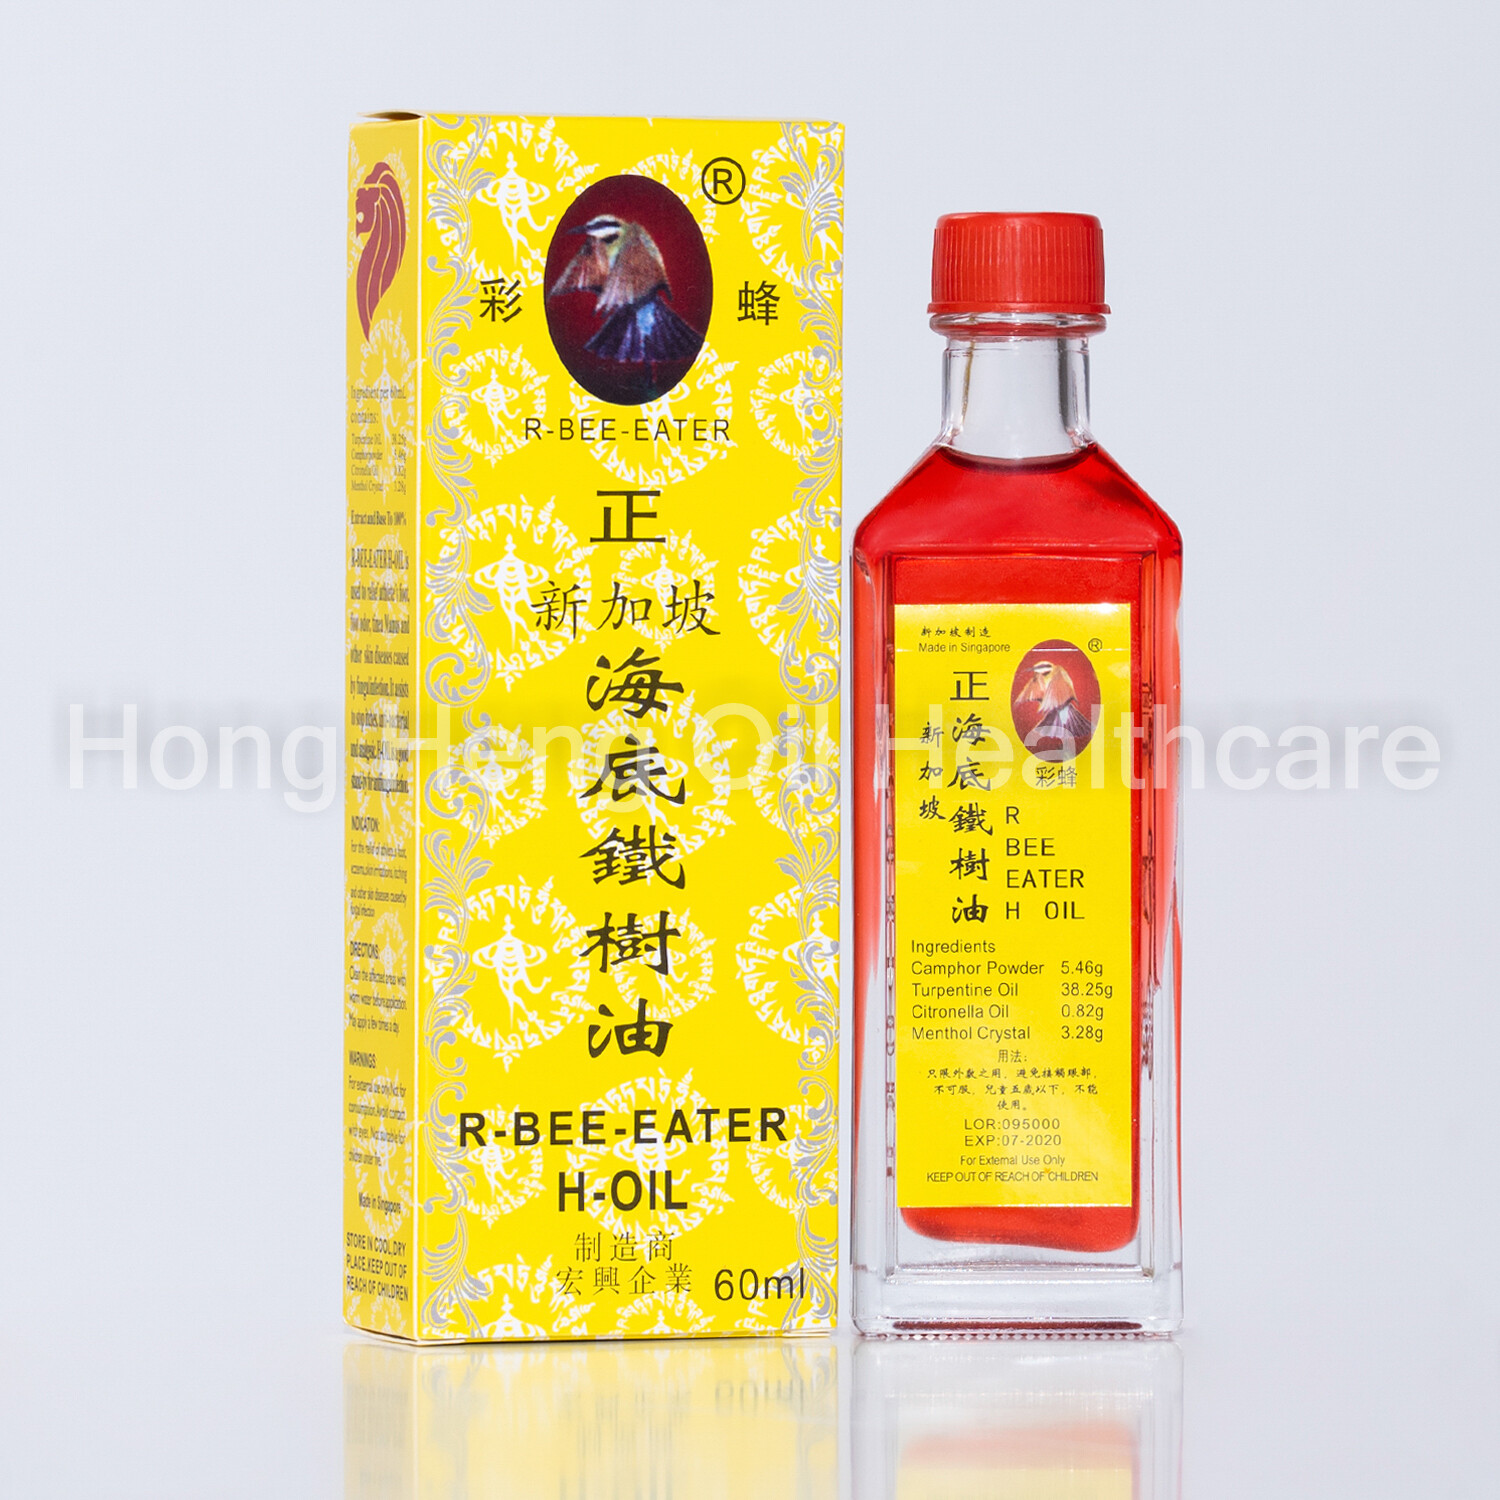 R Bee Eater Brand H-OIL For Skin Fungal Infection 新加坡彩蜂标正海底铁树油 皮肤良药 (60ml)